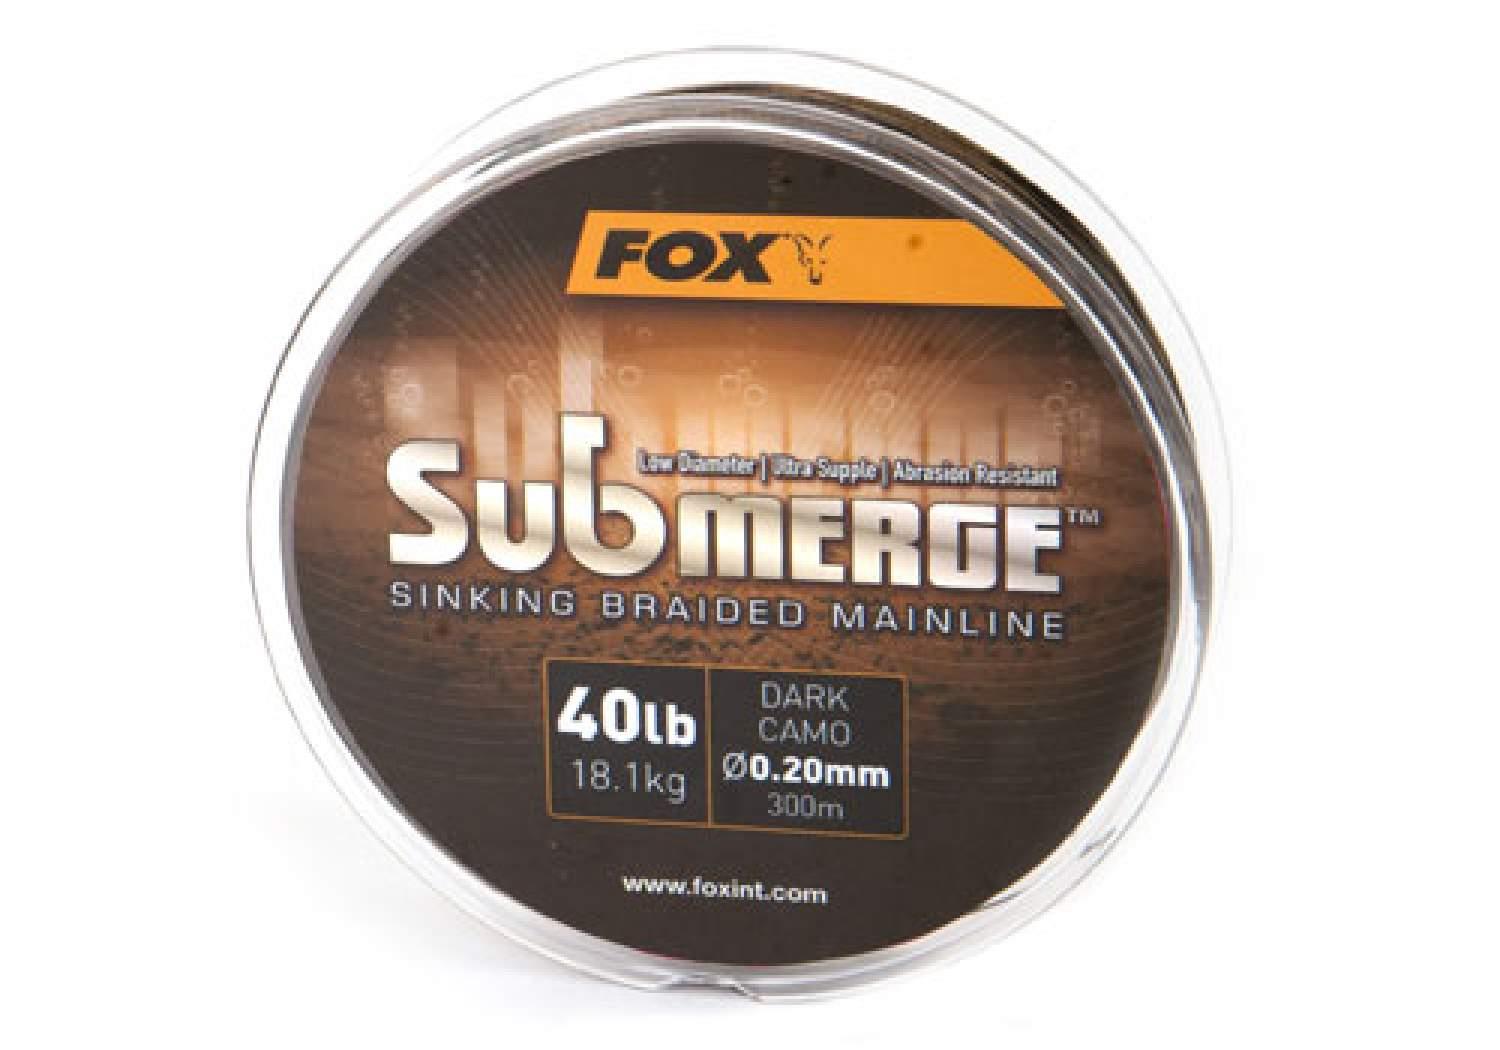 Fox Submerge Sinking Braided Mainline - Dark Camo 600m